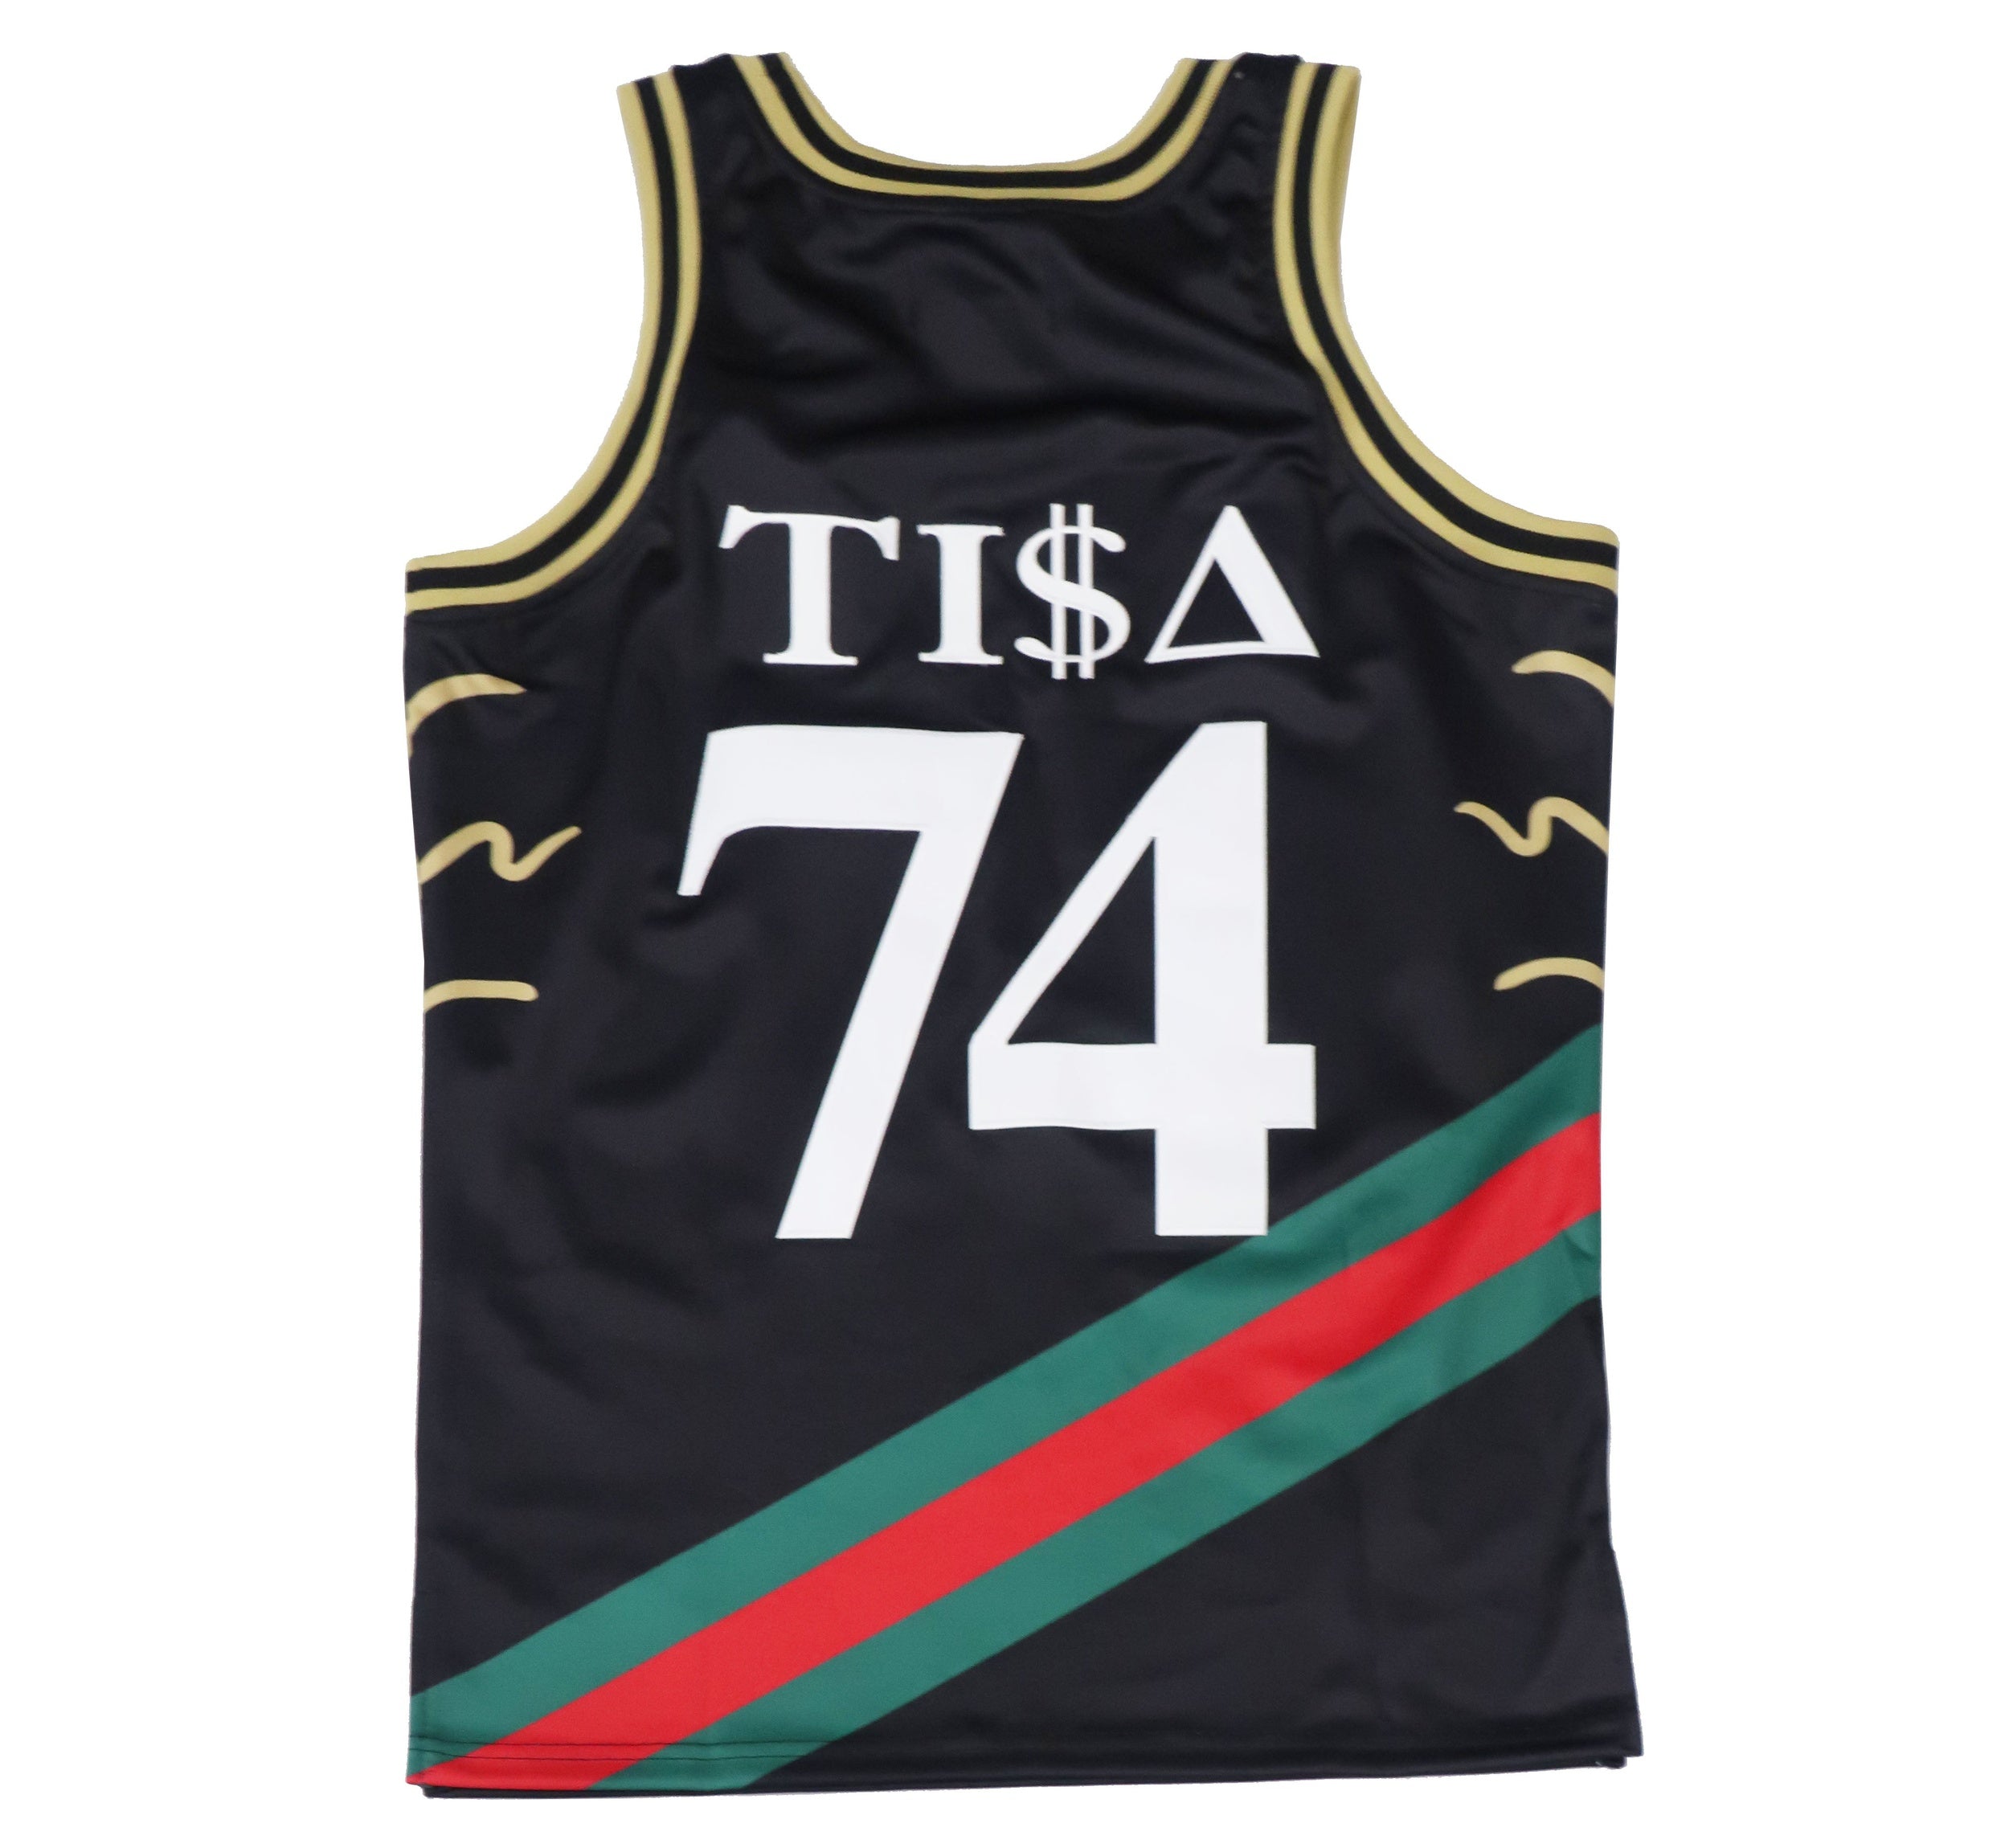 Wholesale Headgear Classics Brand Tisa Striped Basketball Jersey